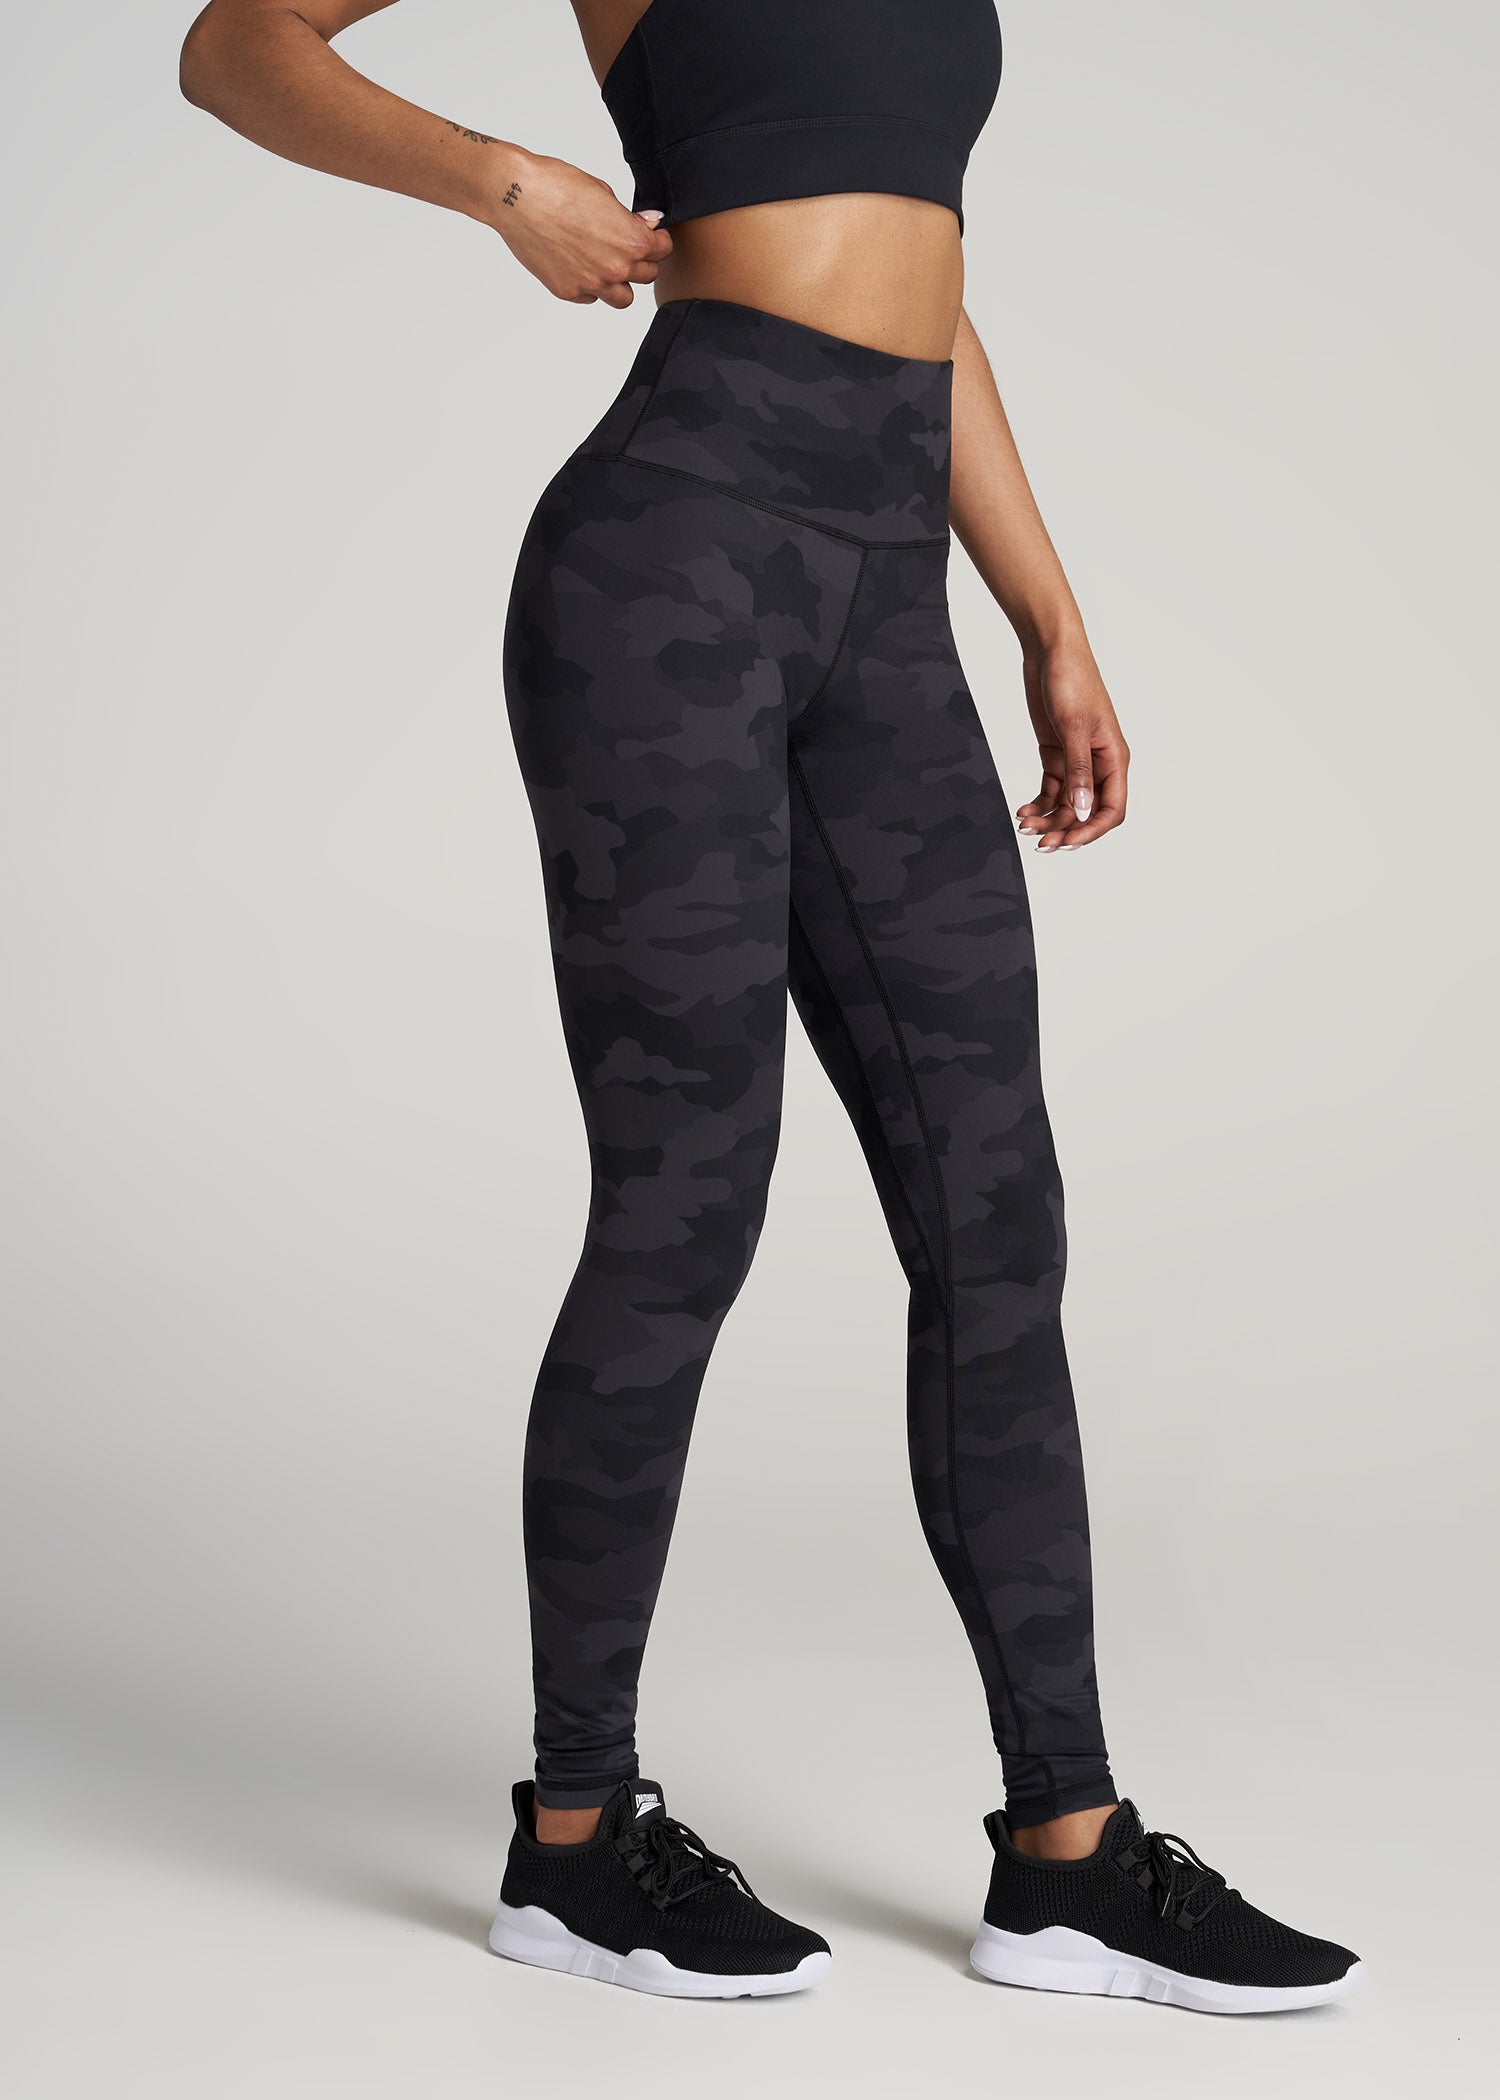 Camo Scrunch Leggings | Women's Activewear Apparel – Amber Athletica